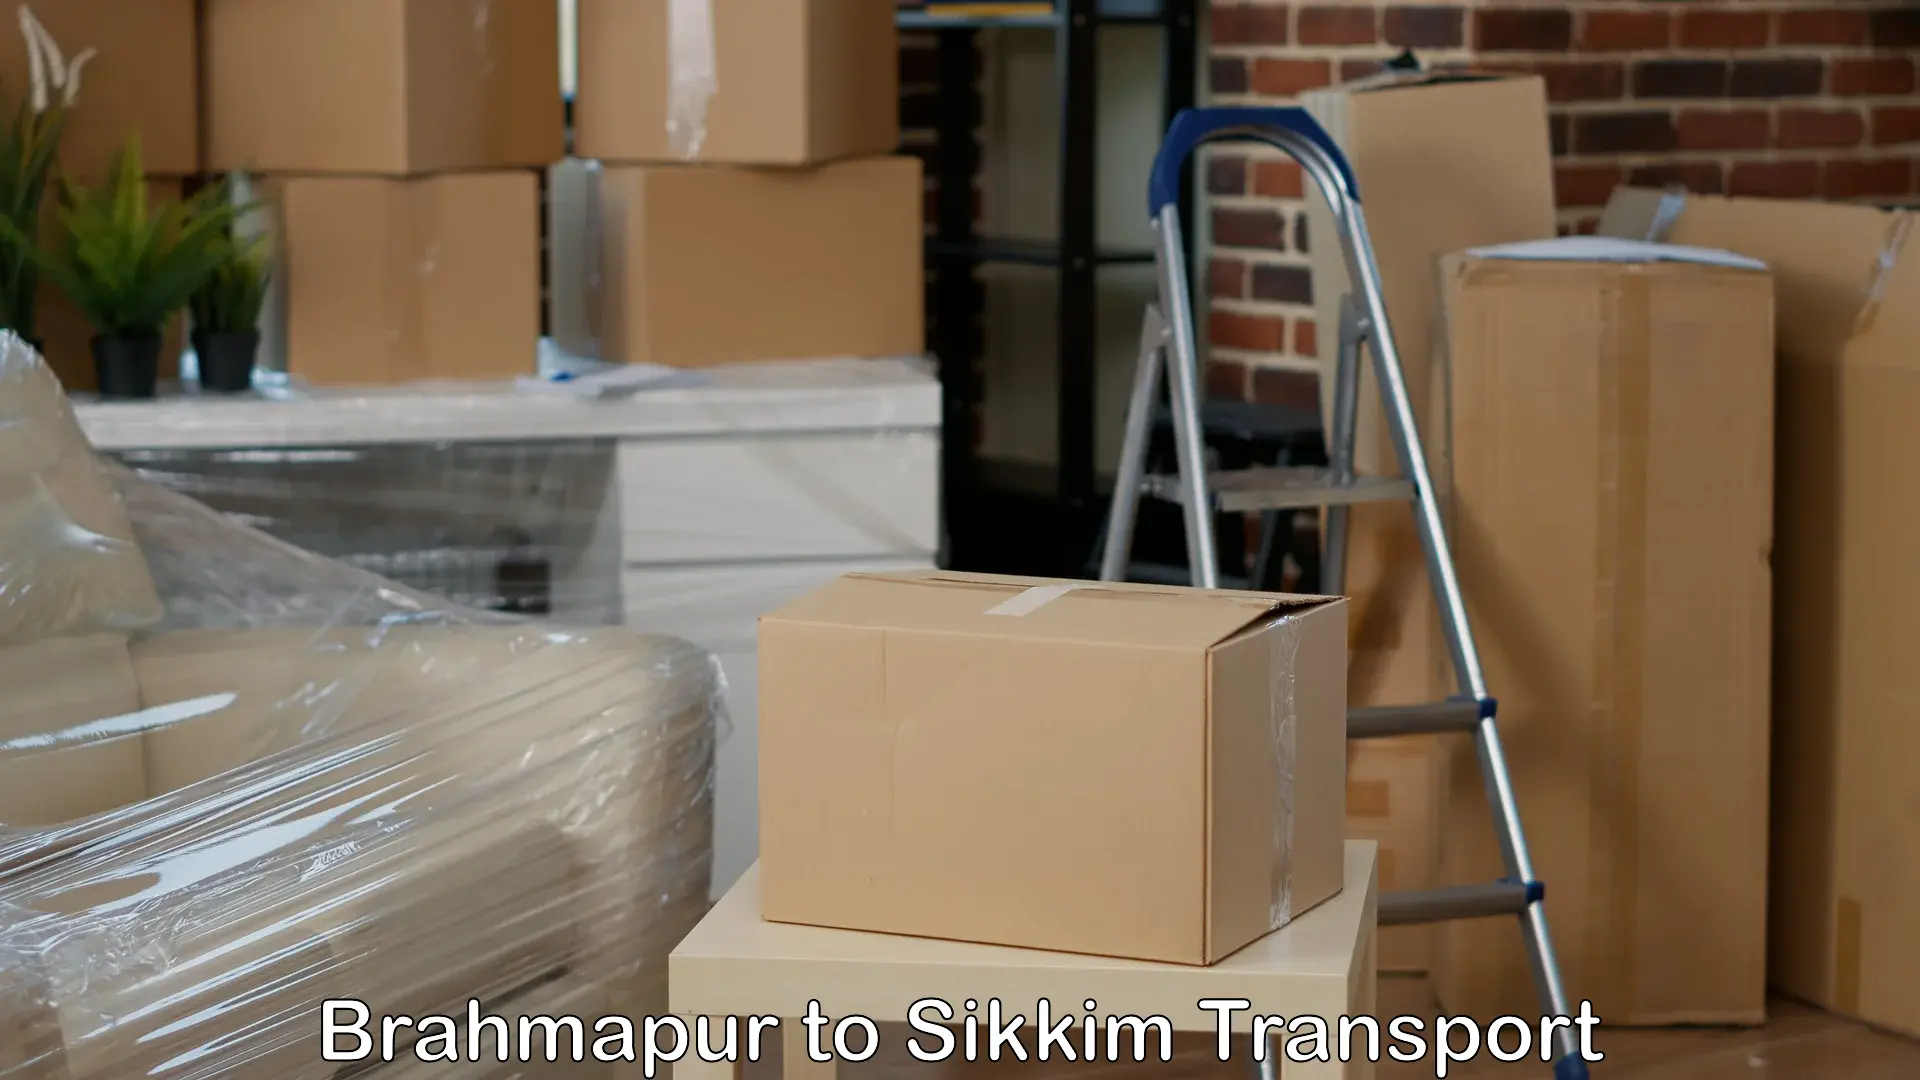 Truck transport companies in India Brahmapur to Pelling